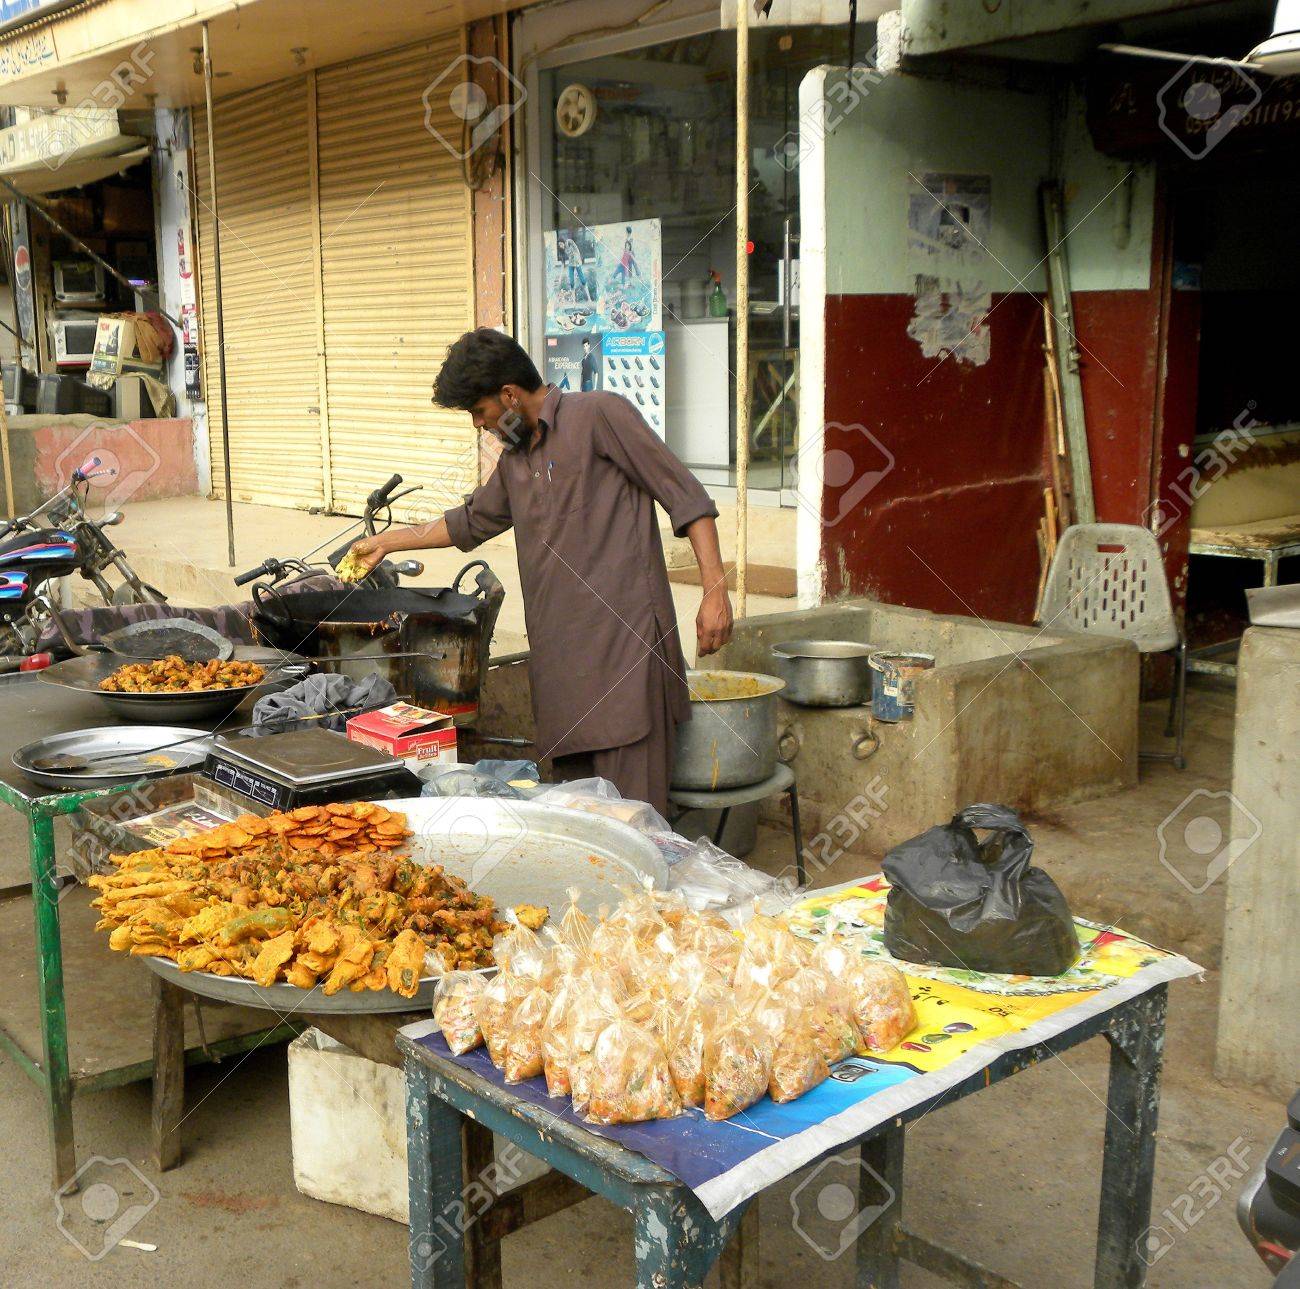 14616636-pakistan-karachi_a-guy-is-cooking-snacks-pakkora-before-open.jpg